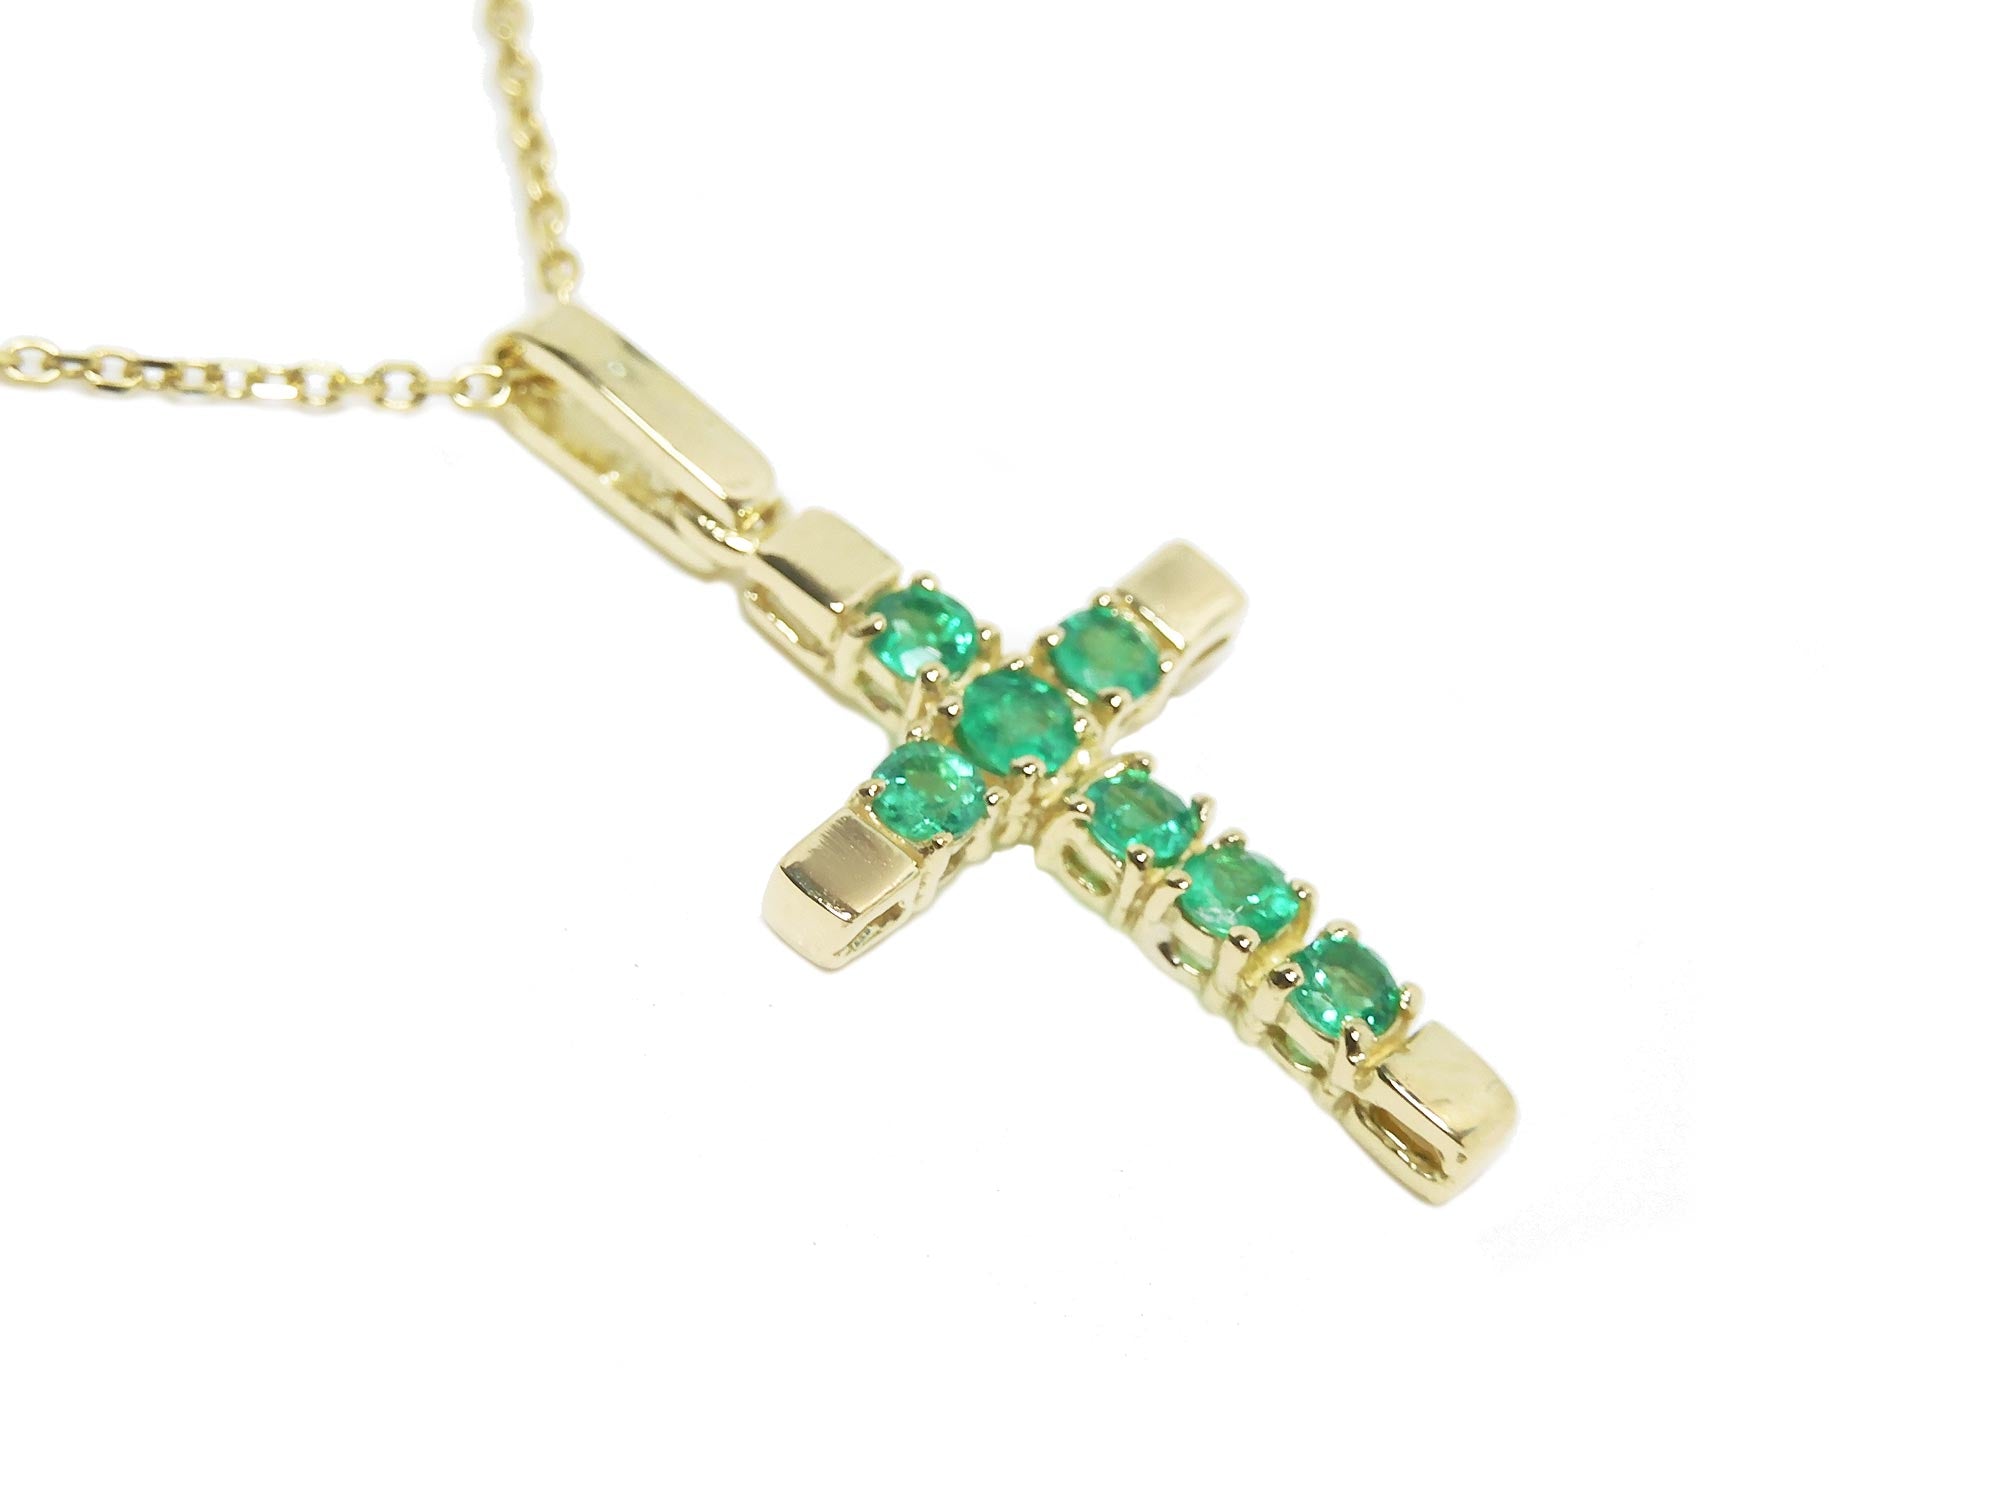 Emerald crosses